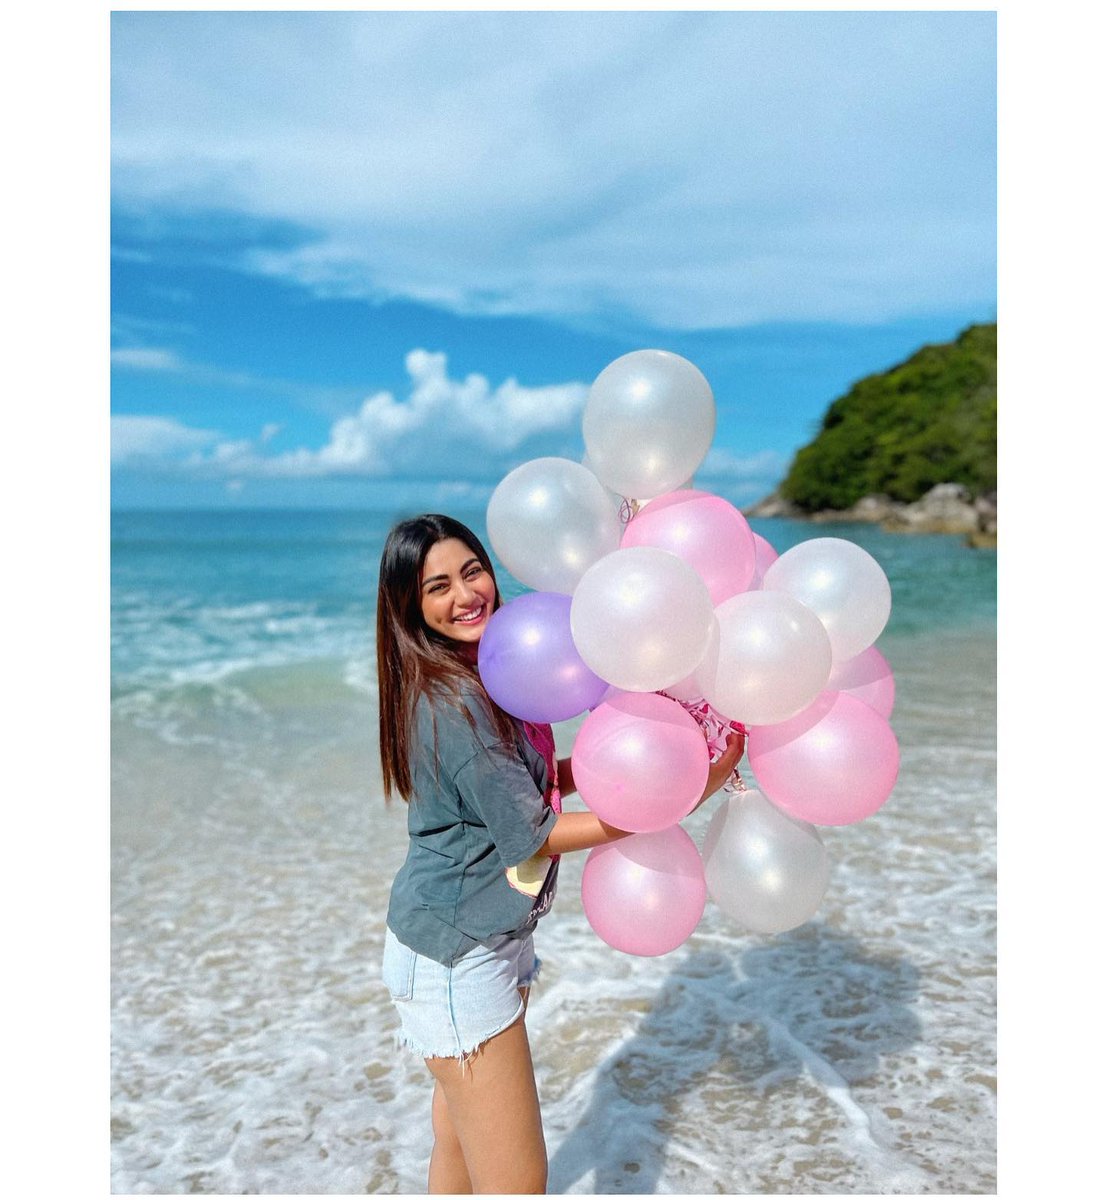 The Indian actress Sana Makbul😊🎈#sanamakbul #indianactress #indiangirl #beachvibes #summertime #seaside #cutegirl #seaandsky #balloons